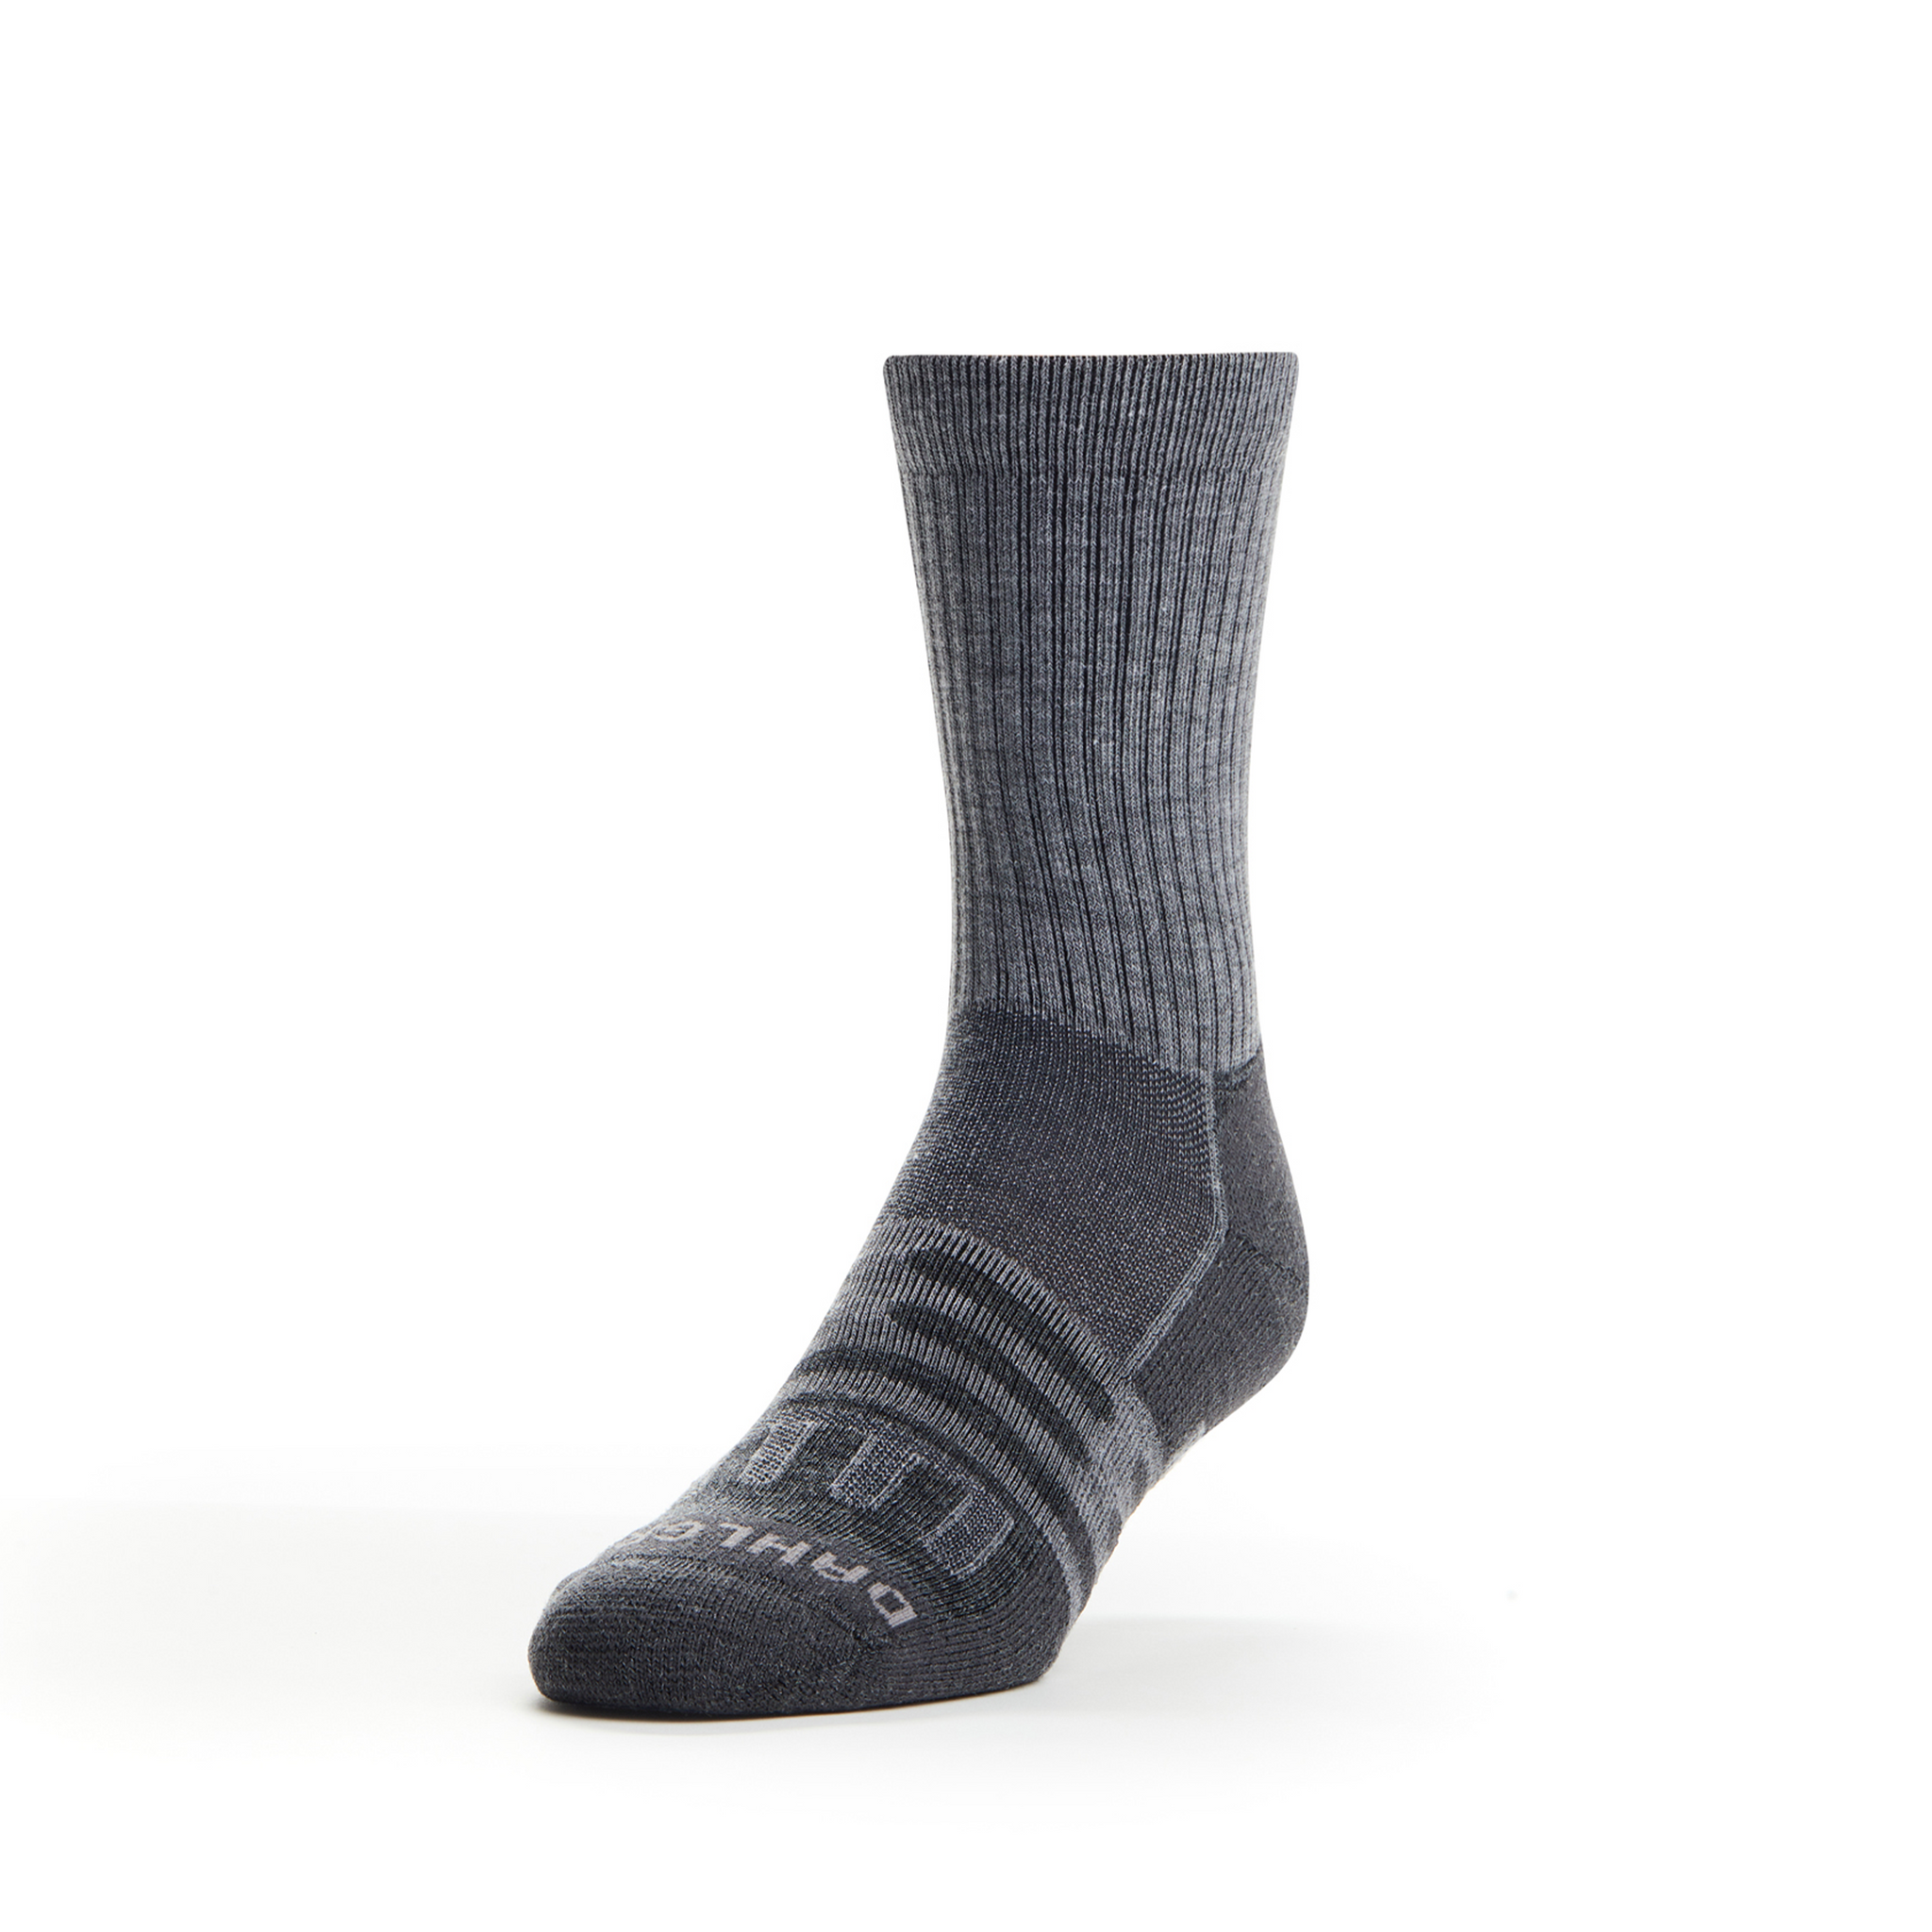 APOGEE CLASSIC – Dahlgren Socks USA